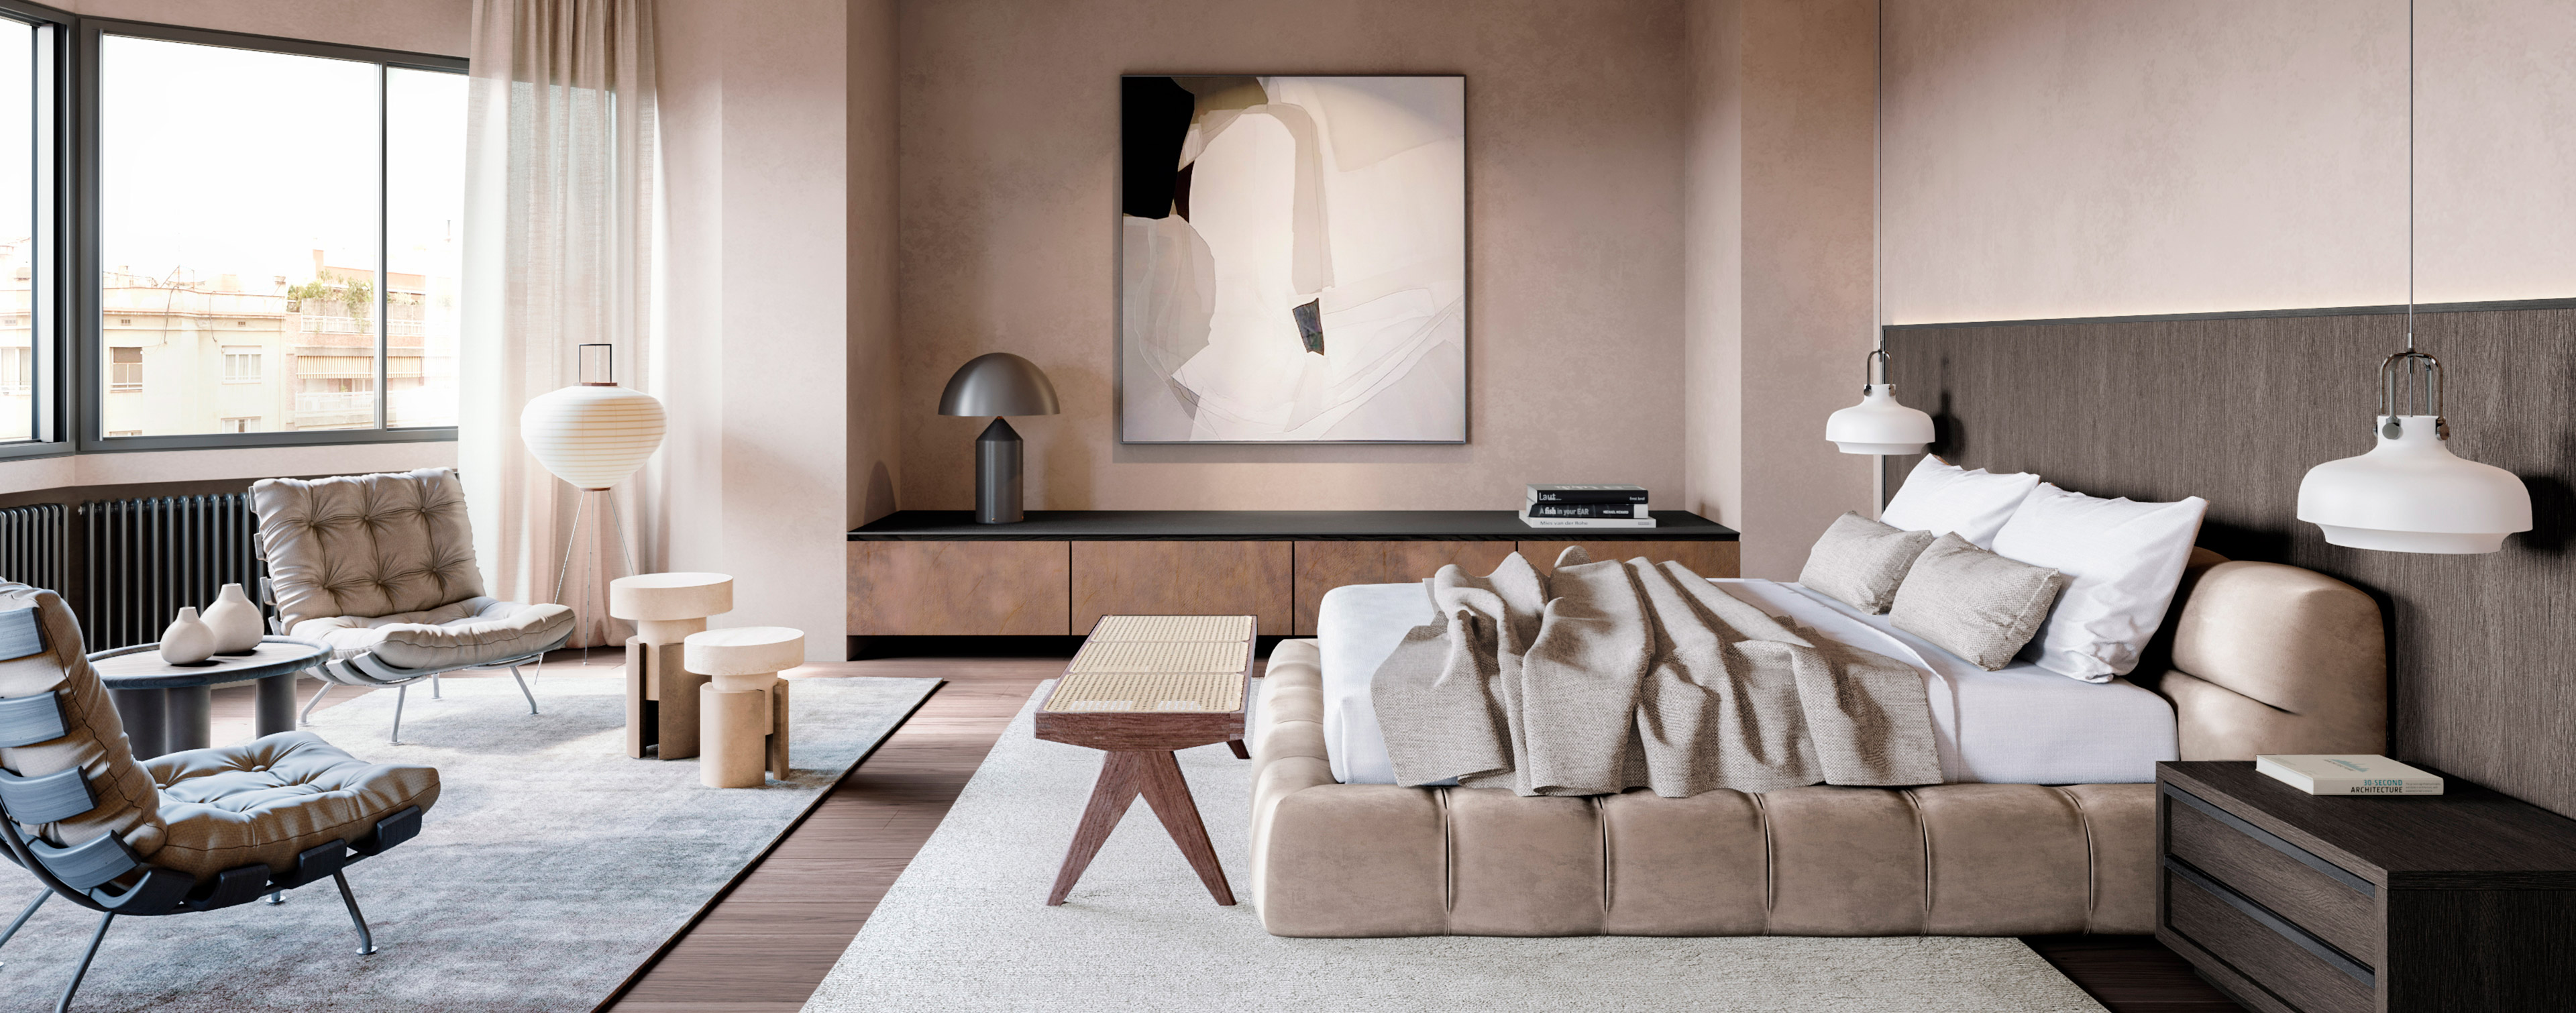 luv studio luxury architects barcelona turo park apartment IMG 01 - LUV Studio - Architecture & Design - Barcelona